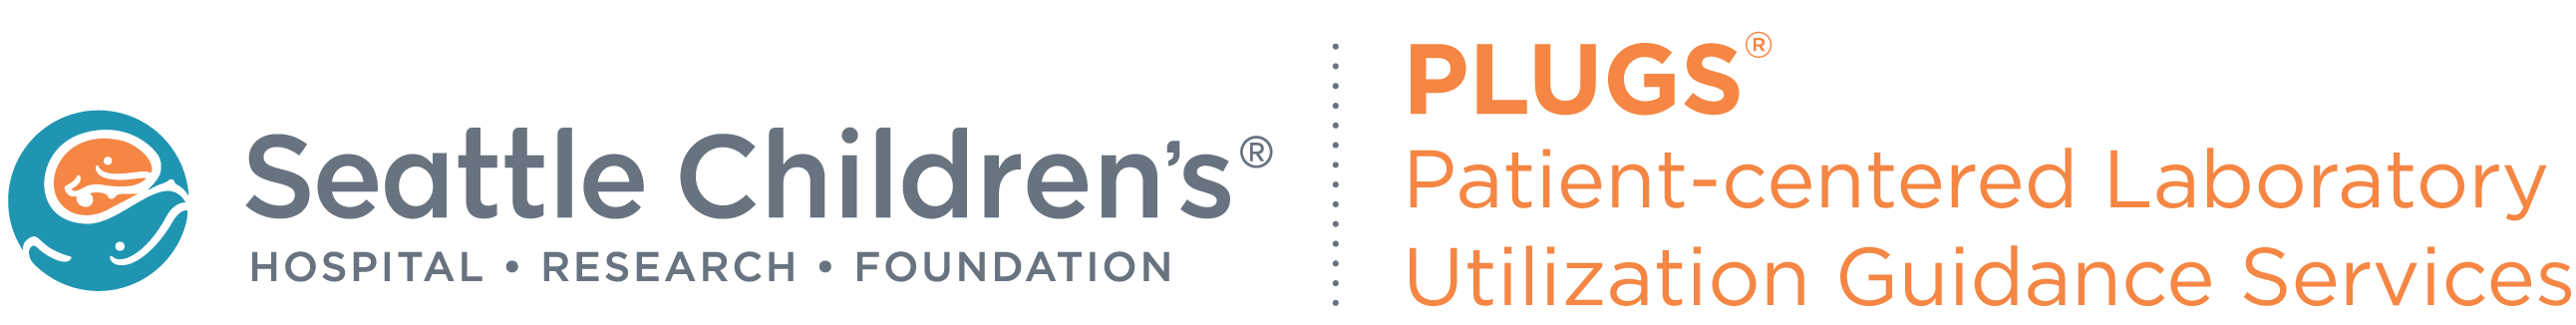 Seattle Children's logo and PLUGS logo